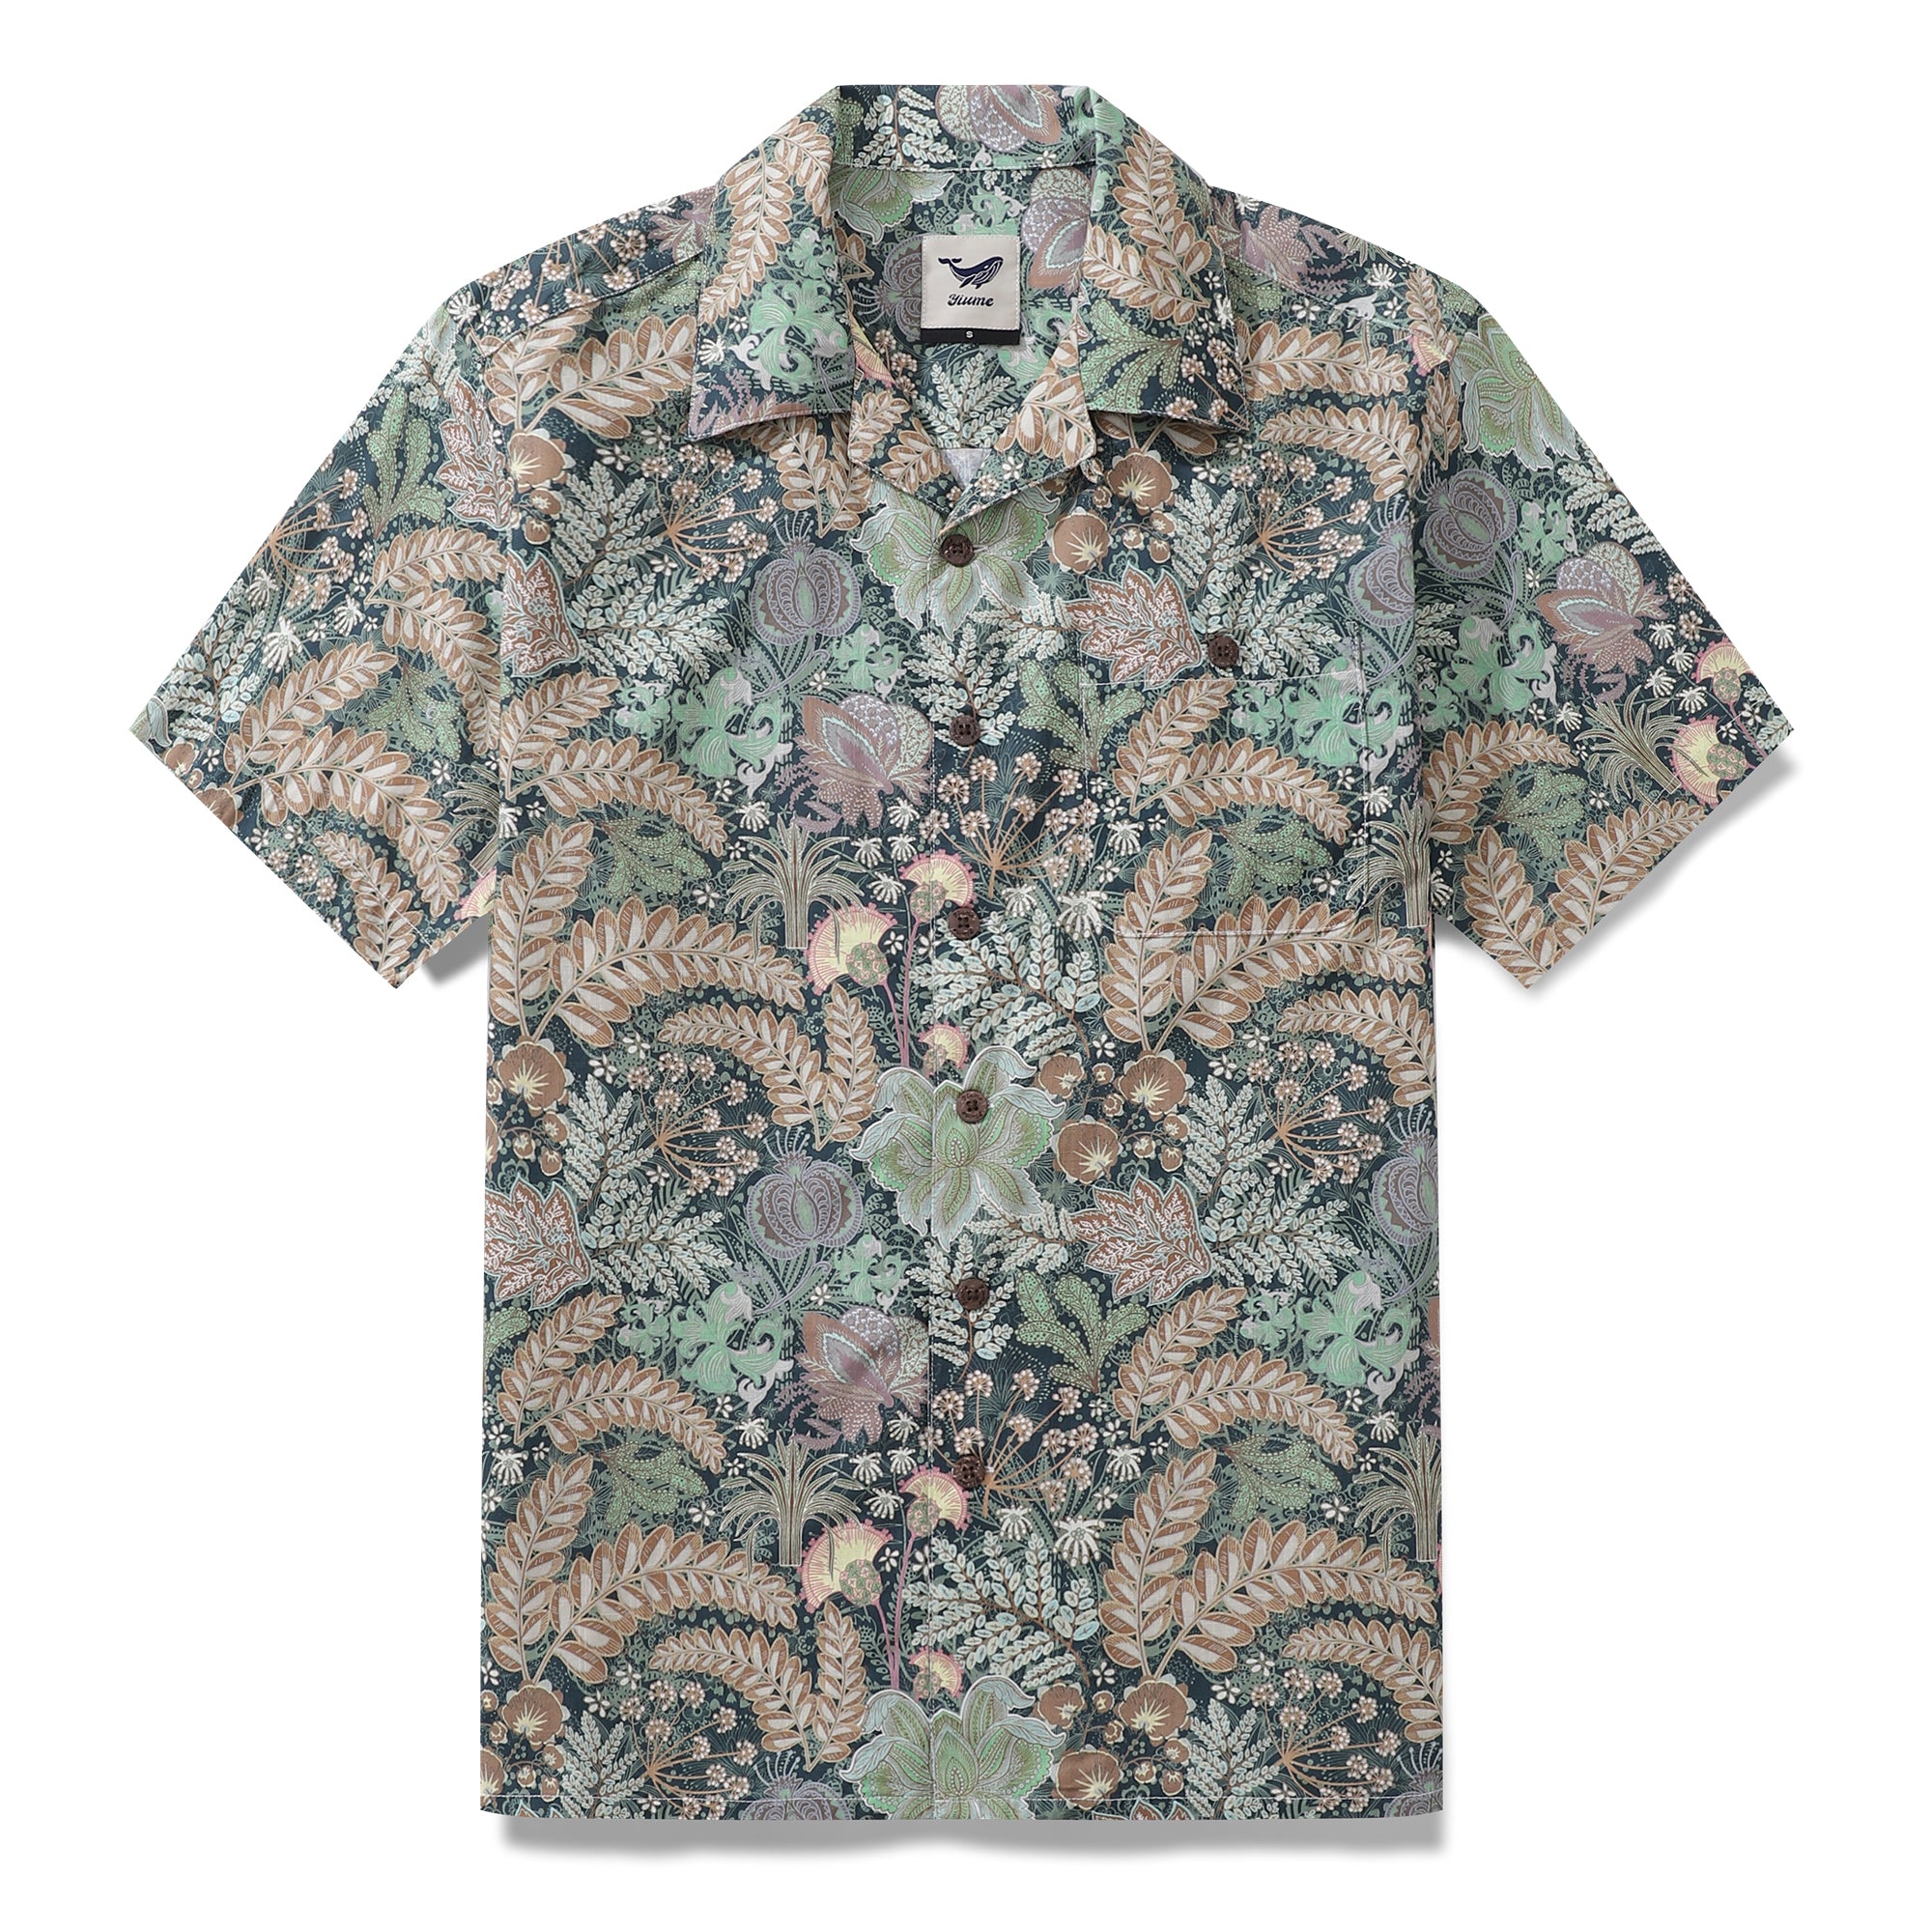 1950s Vintage Hawaiian Shirt For Men Lush Greenery Shirt Camp Collar 100% Cotton